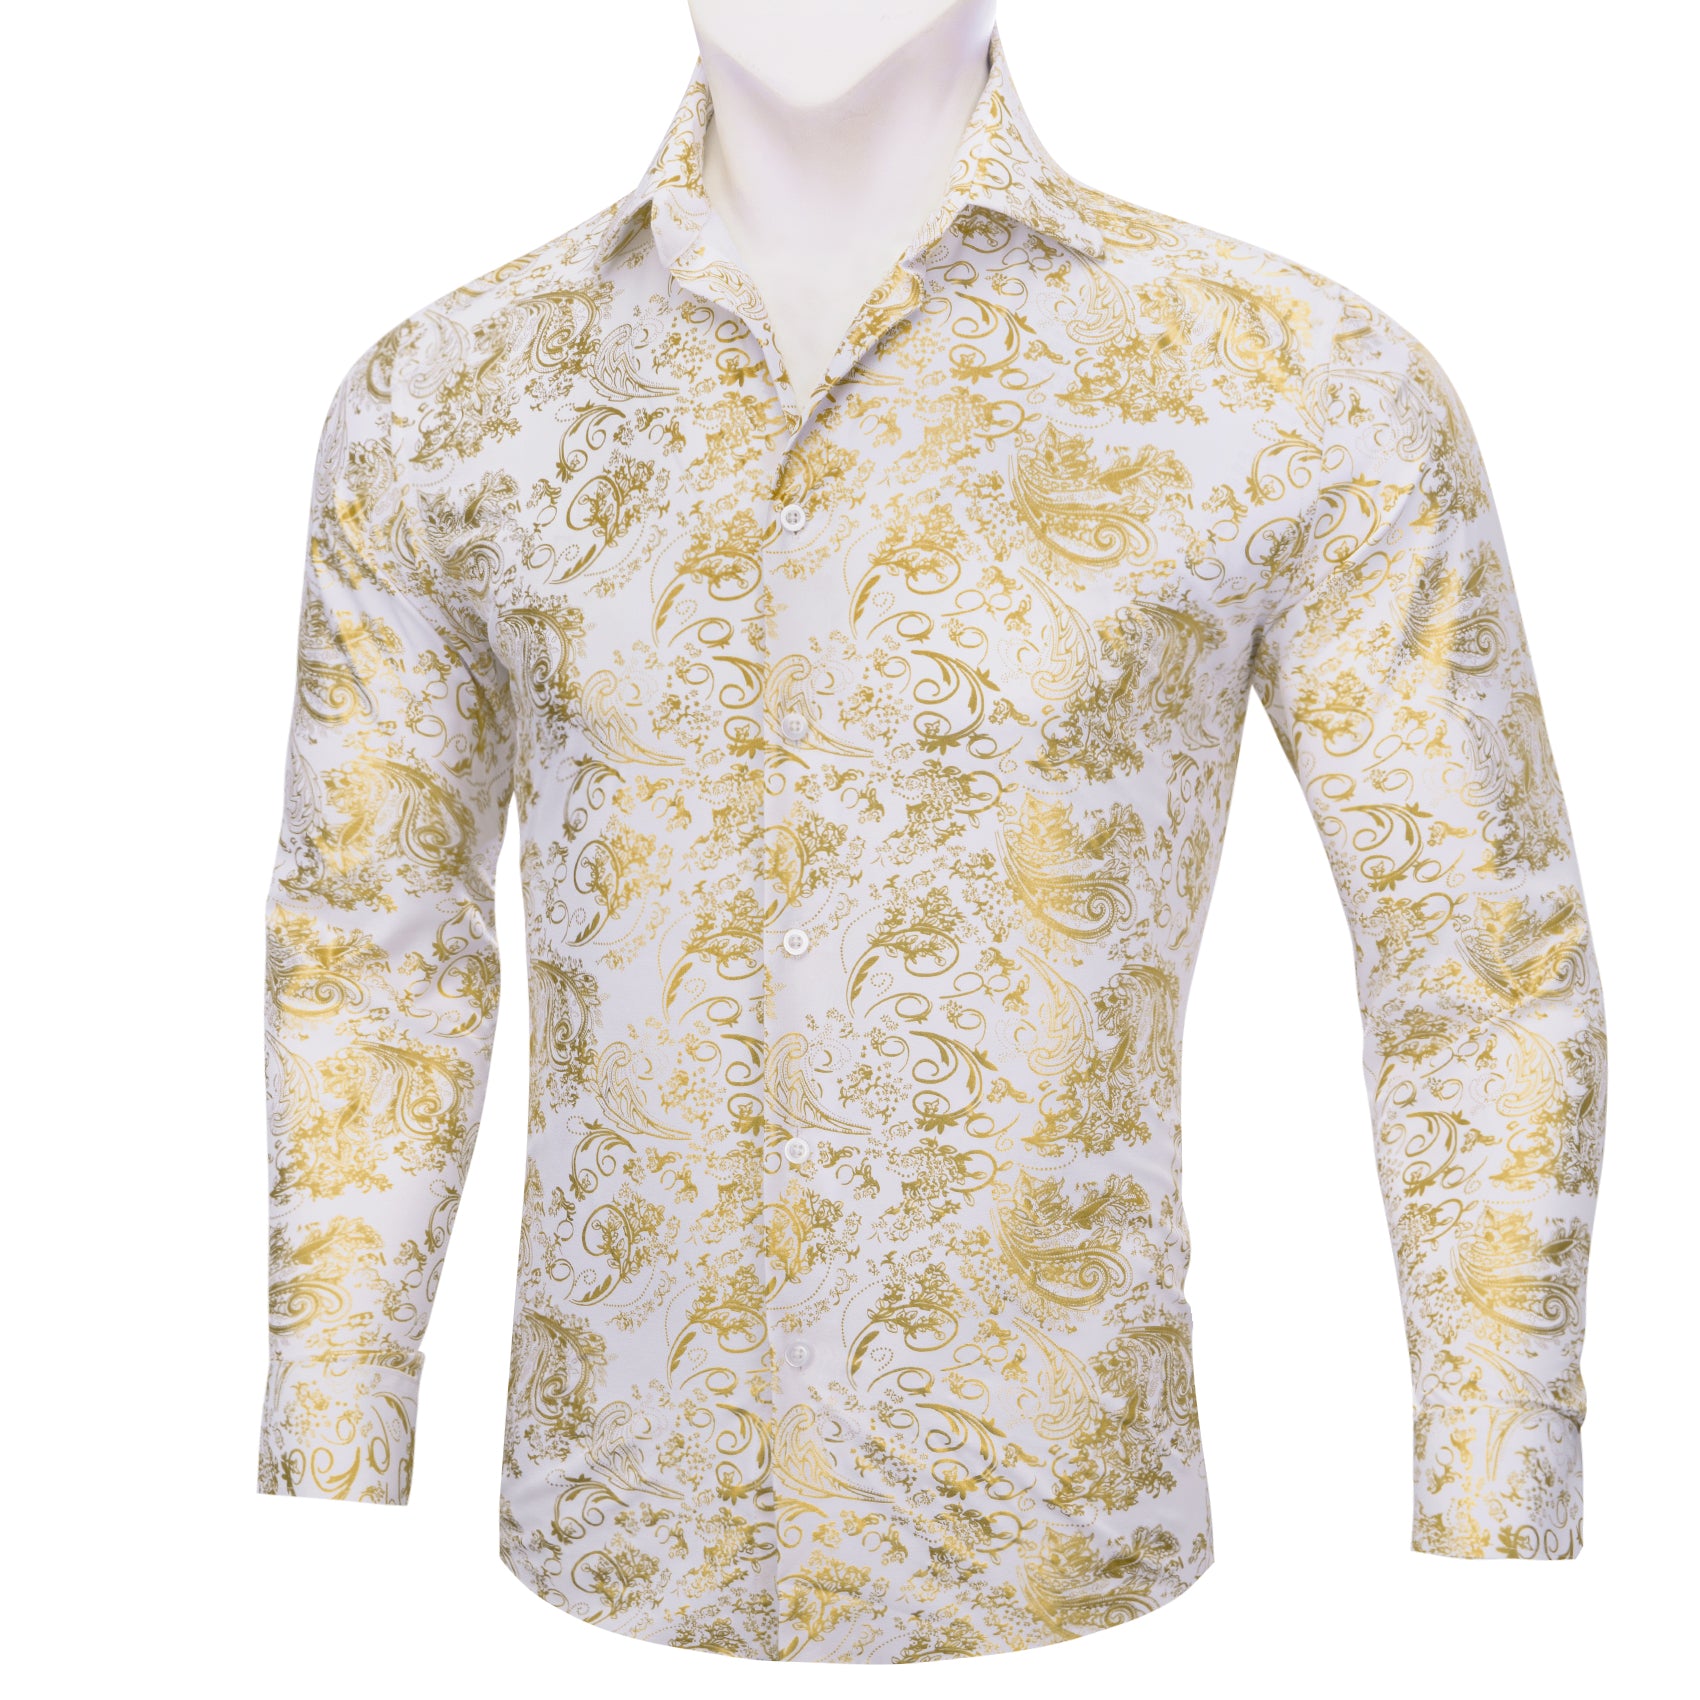 Barry.wang Button Down Shirt White Gold Paisley Silk Shirt for Mens